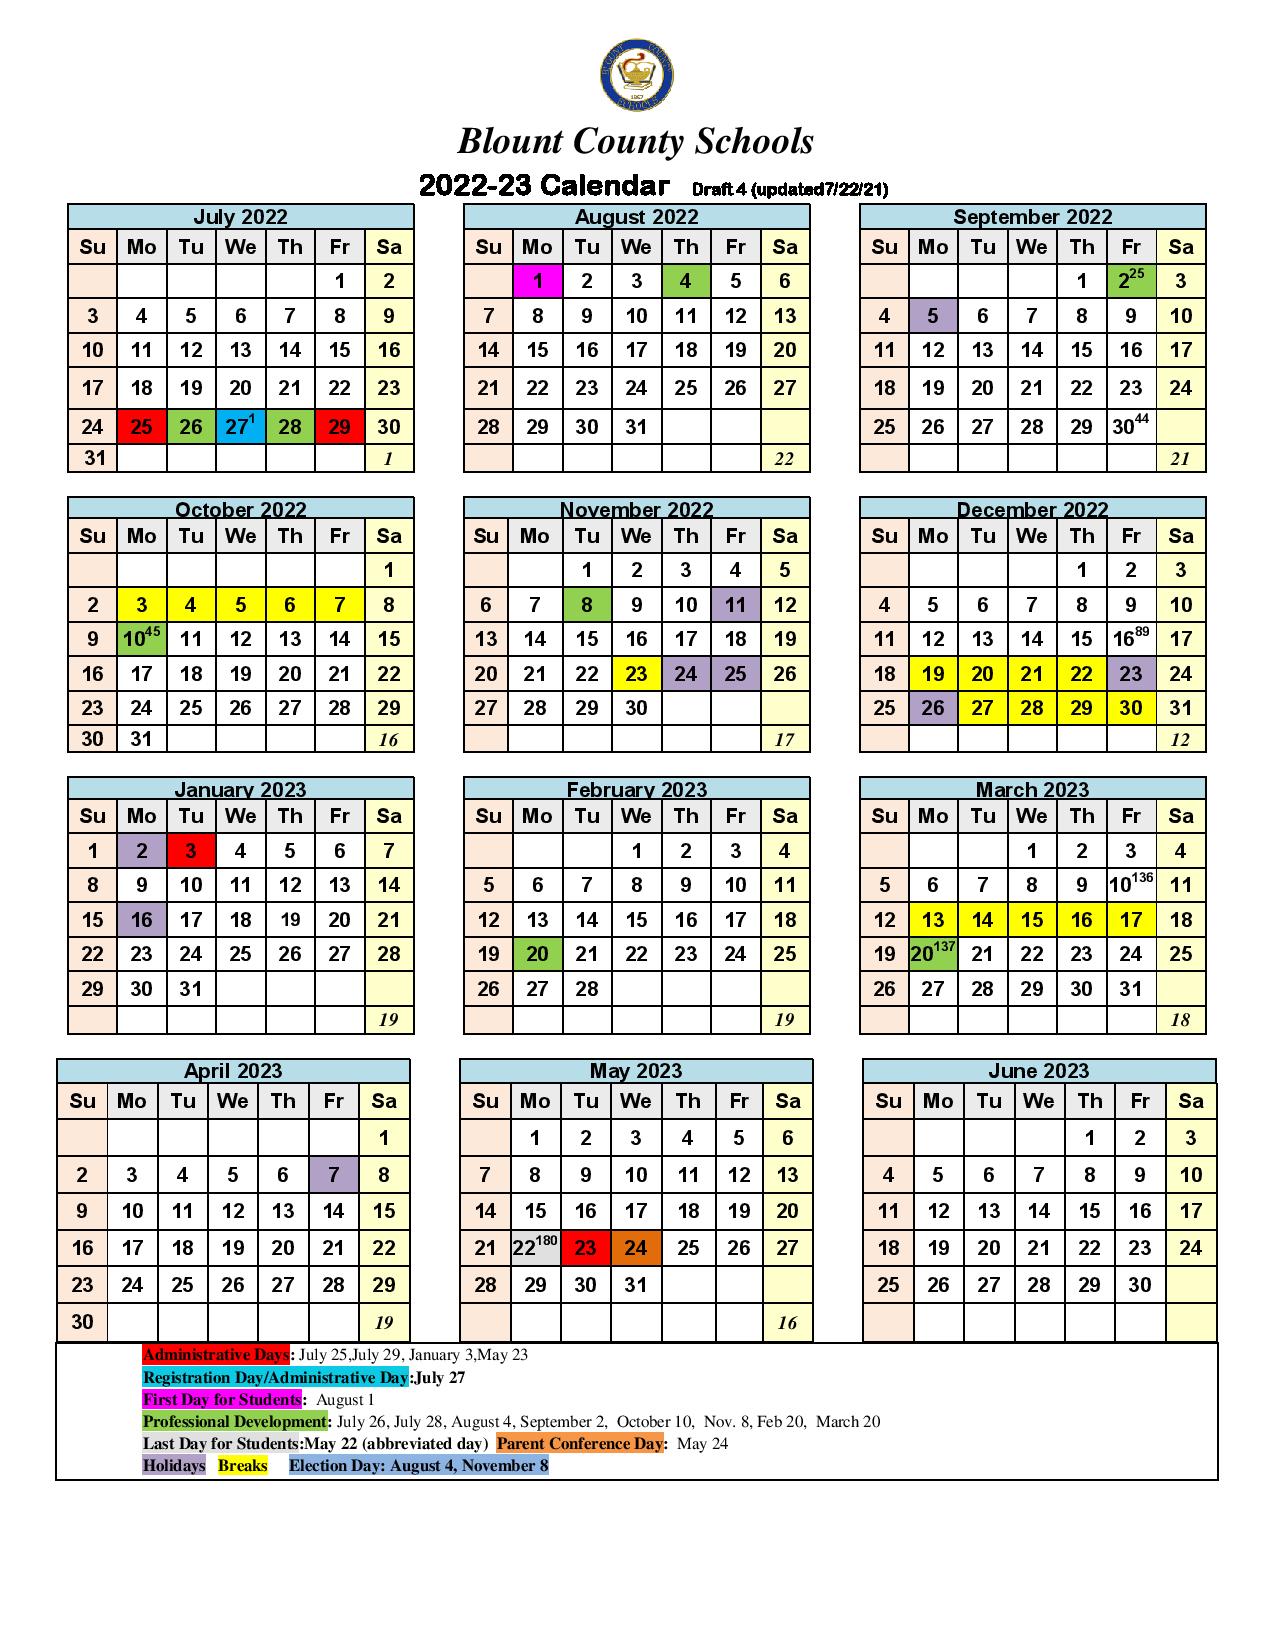 Blount County Schools Calendar 2022-2023 in PDF Format